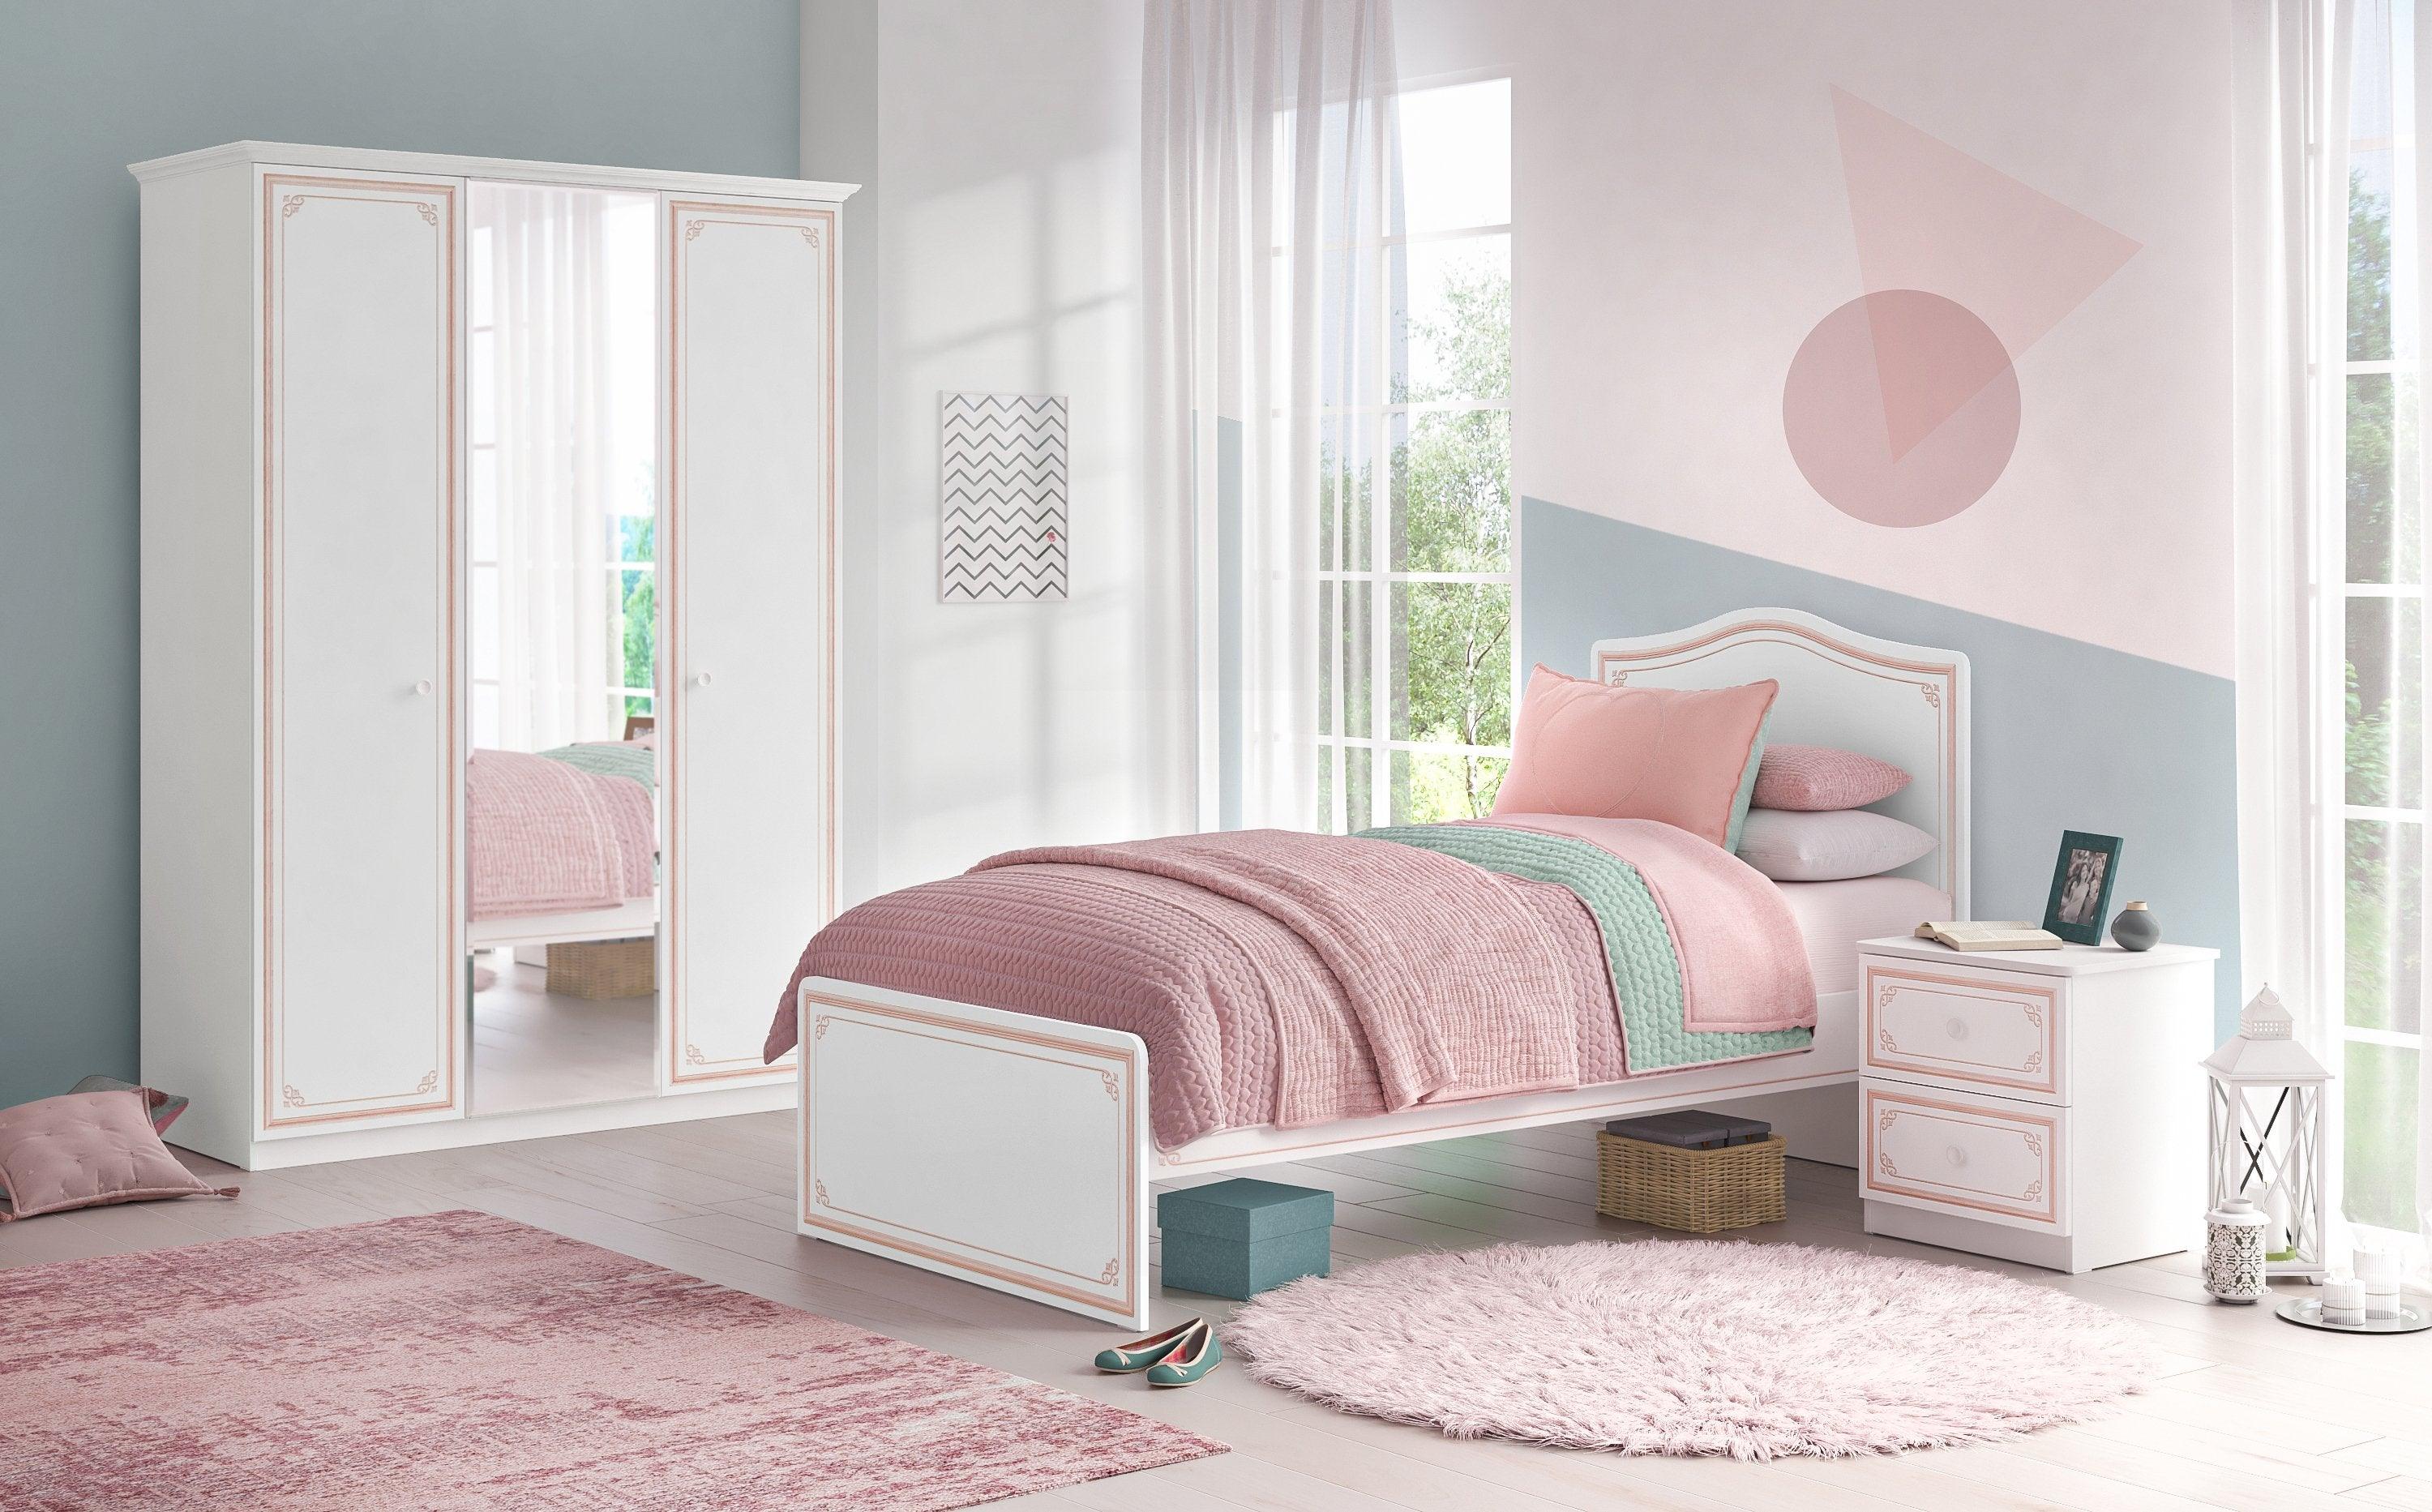 Cilek Selena Pink Bed (100X200 Cm Or 120X200 Cm) - Kids Haven